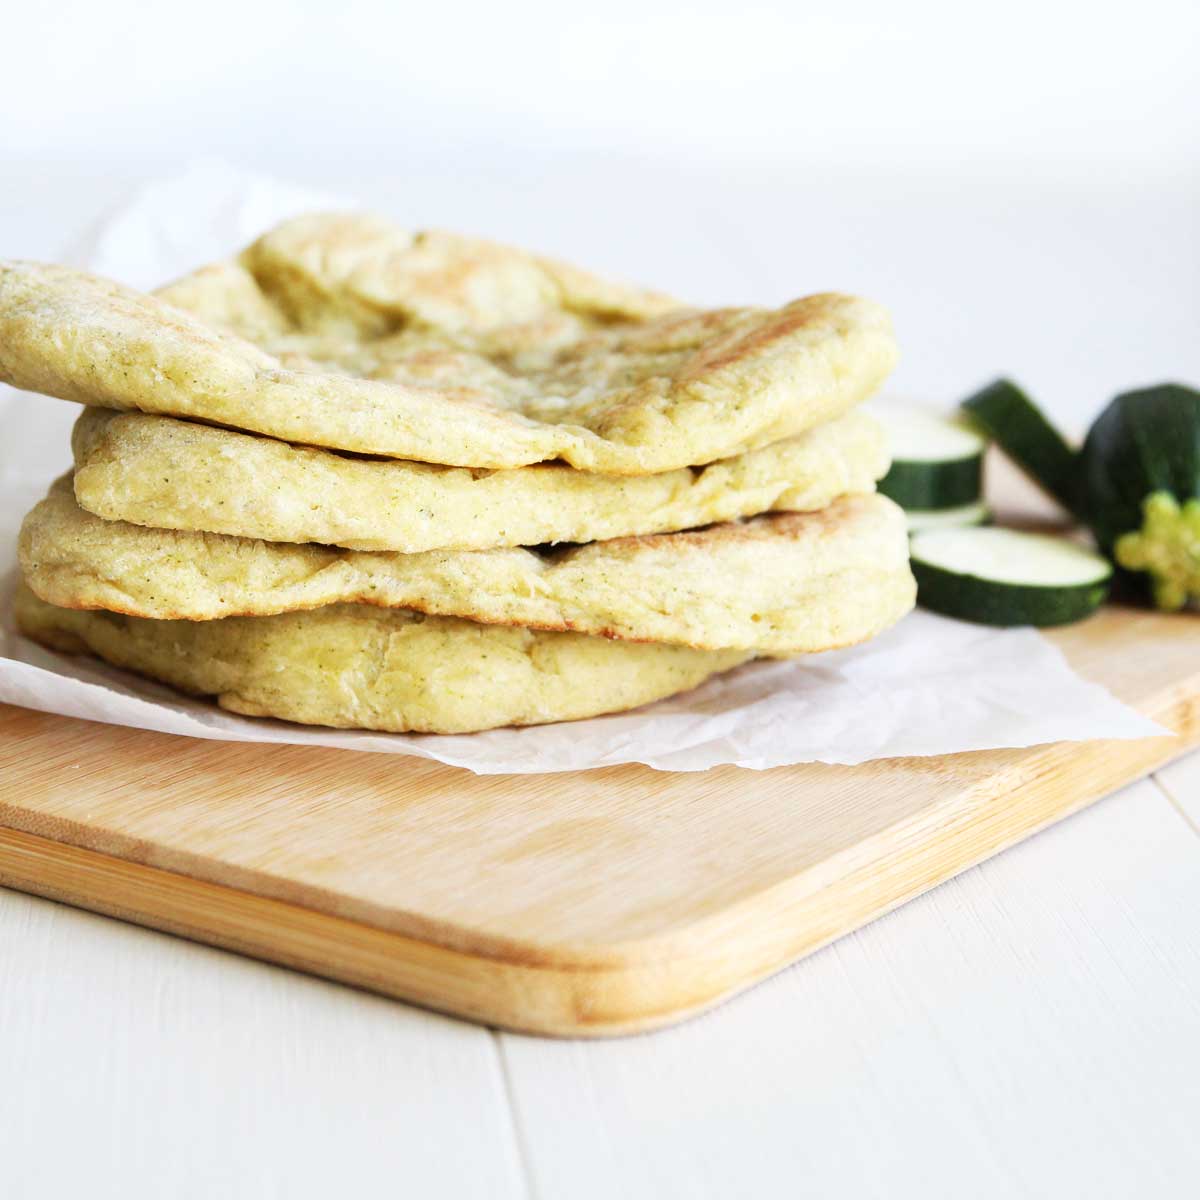 Healthy & Simple Zucchini Flatbread Made in the Food Processor - Sweet Corn Flatbread